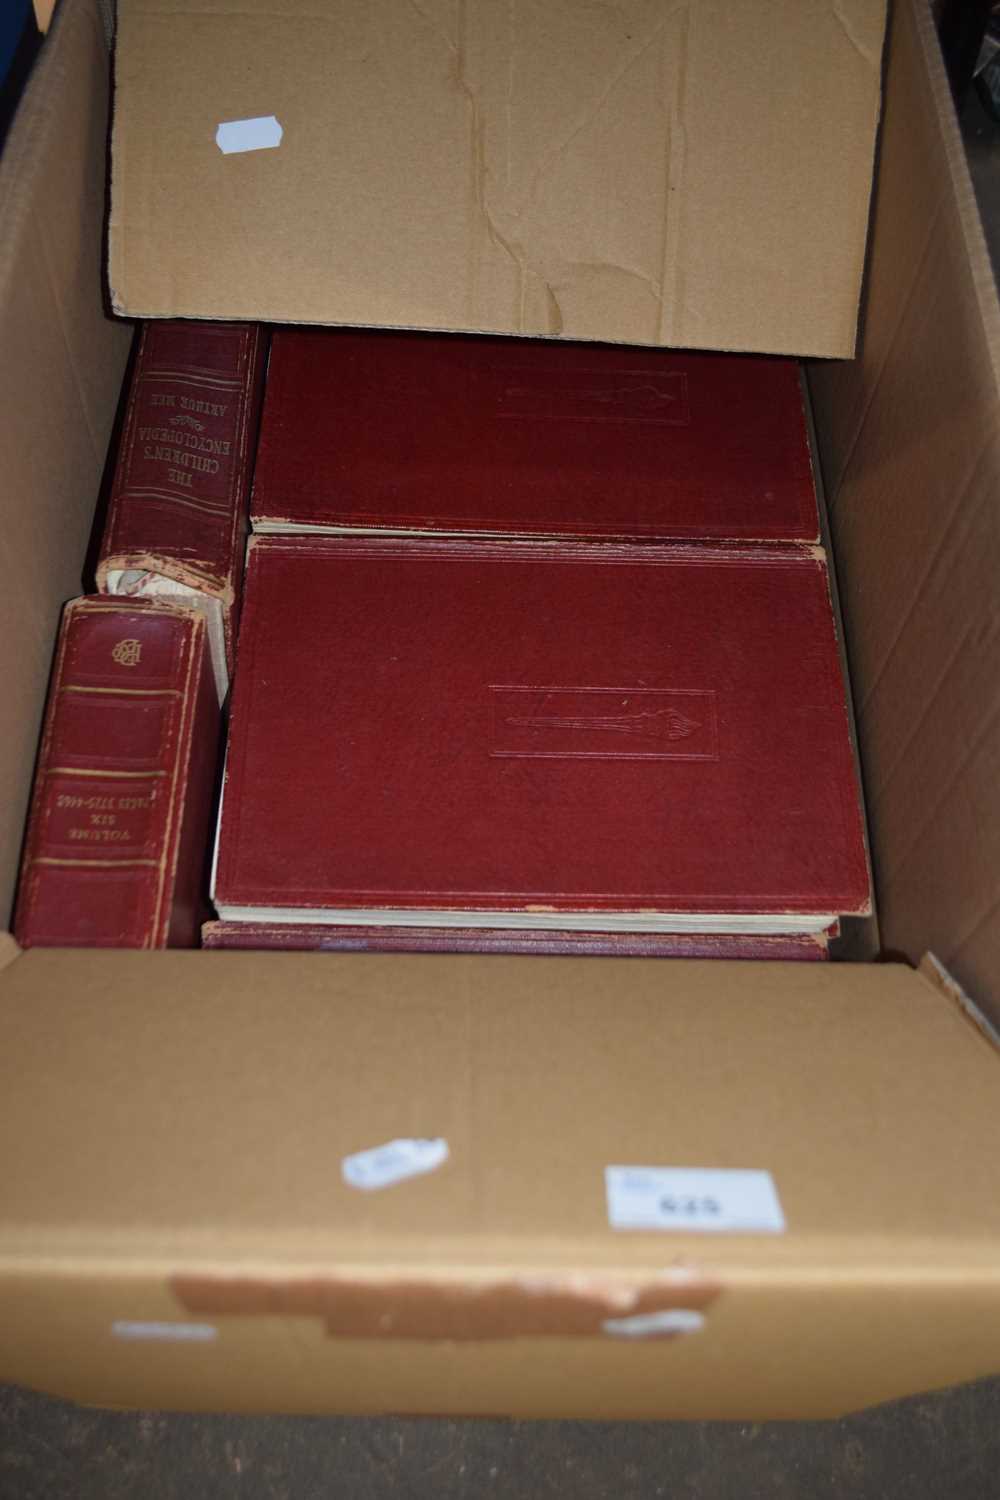 The Children's Encyclopaedia, various volumes